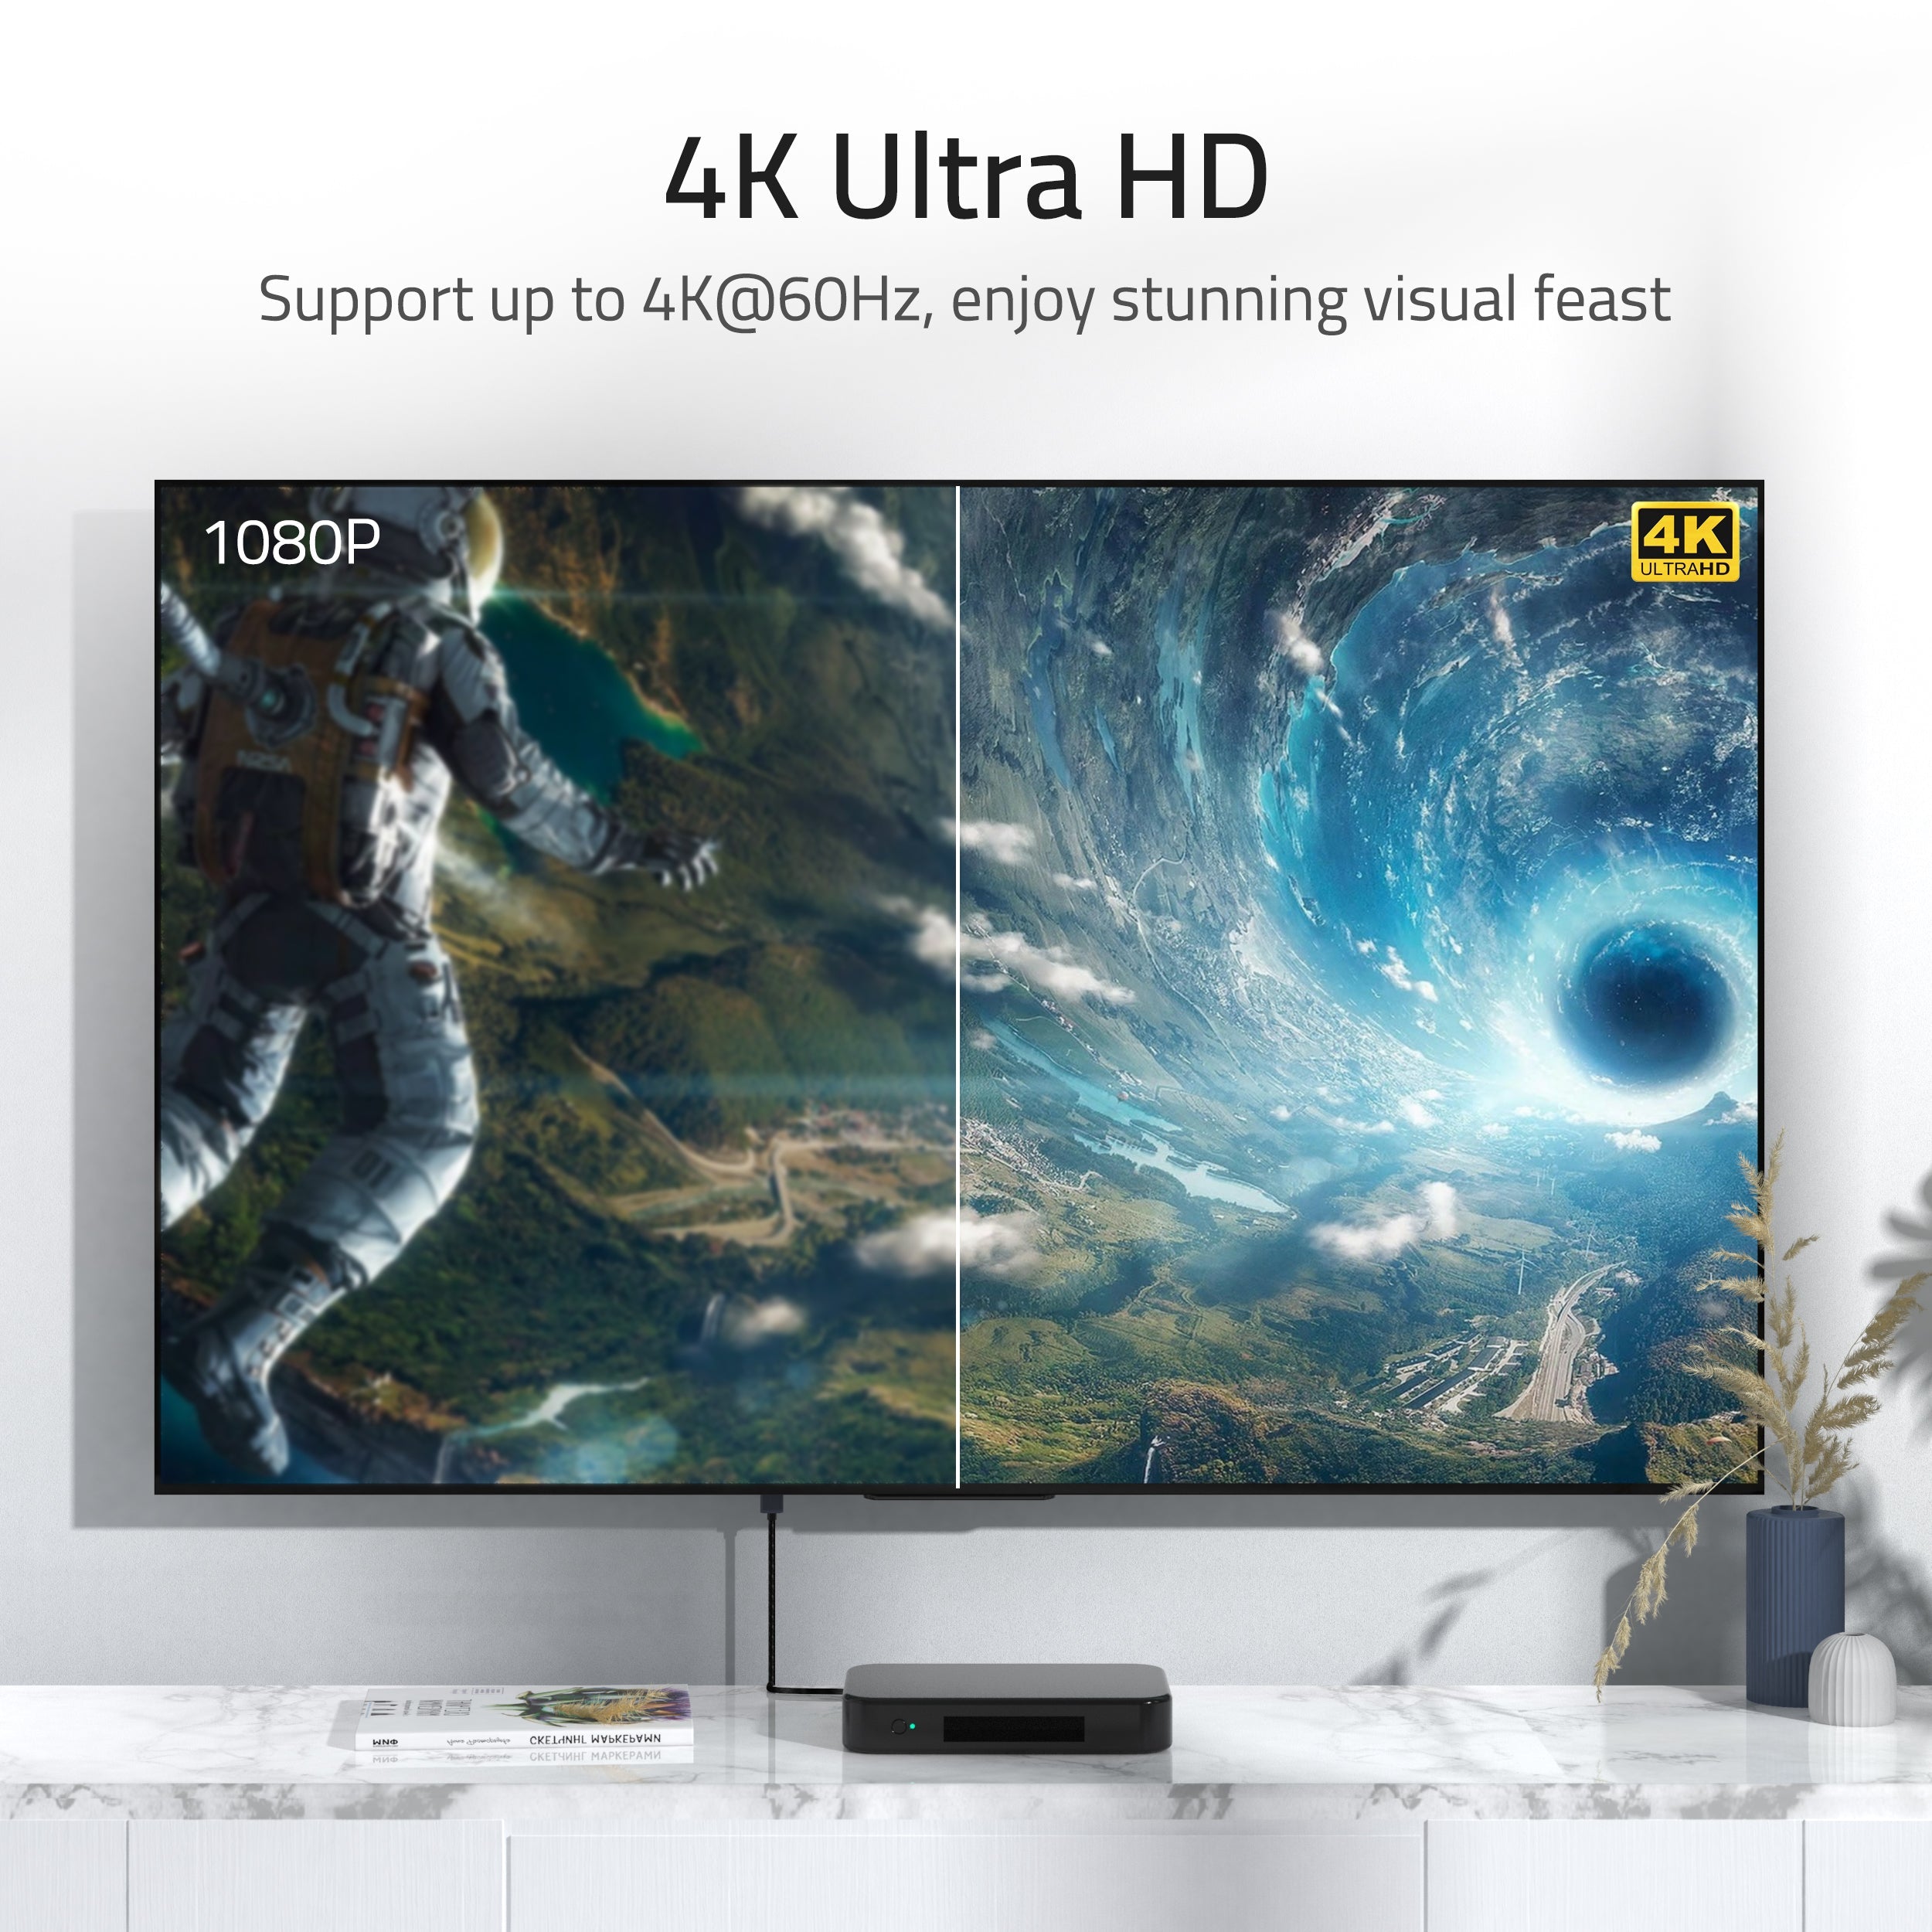 4k Ultra HD